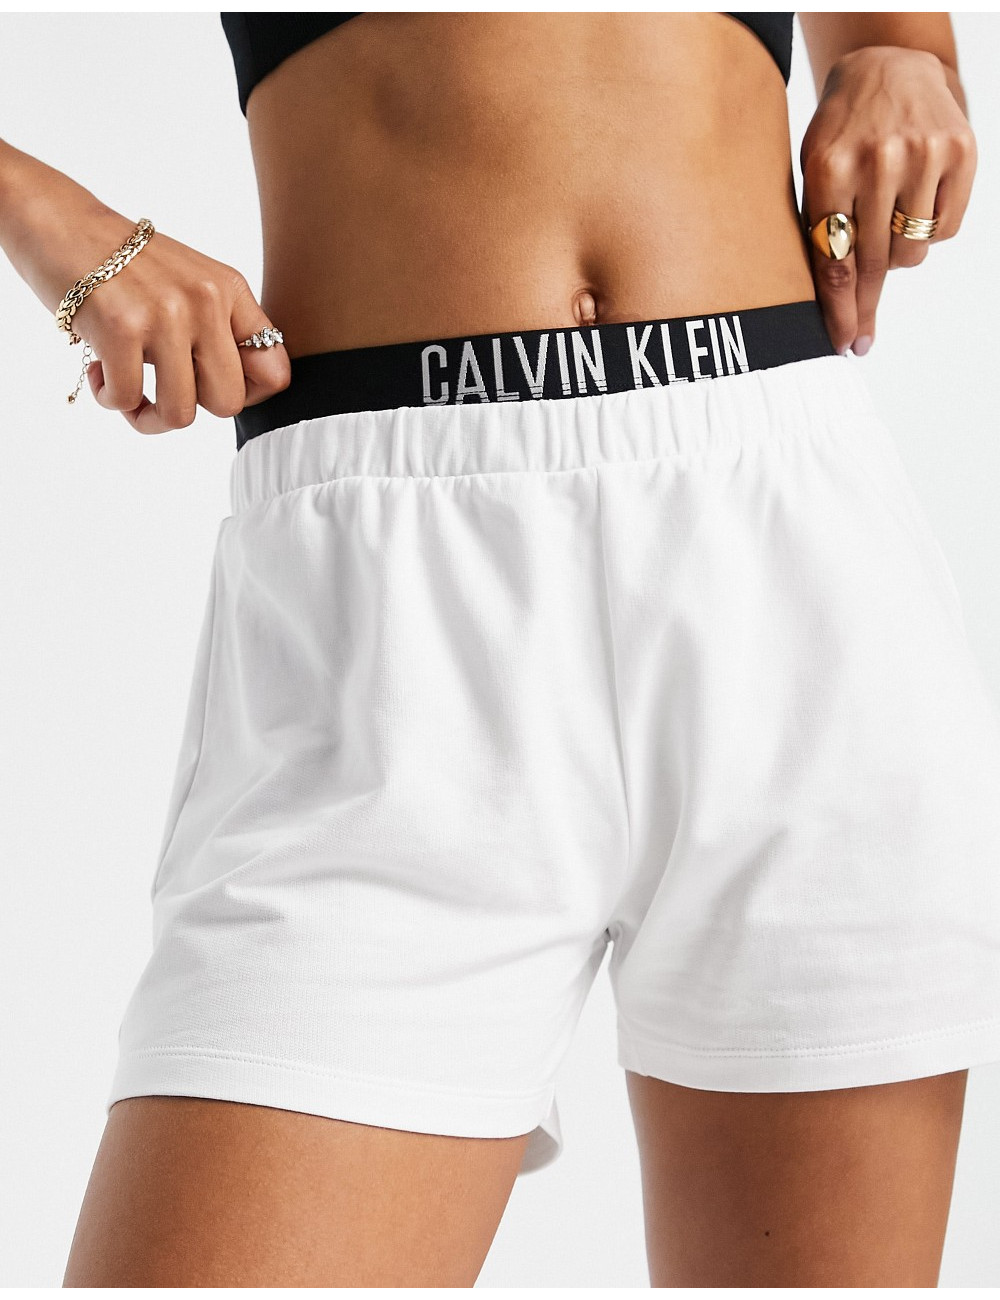 Calvin Klein logo shorts in...